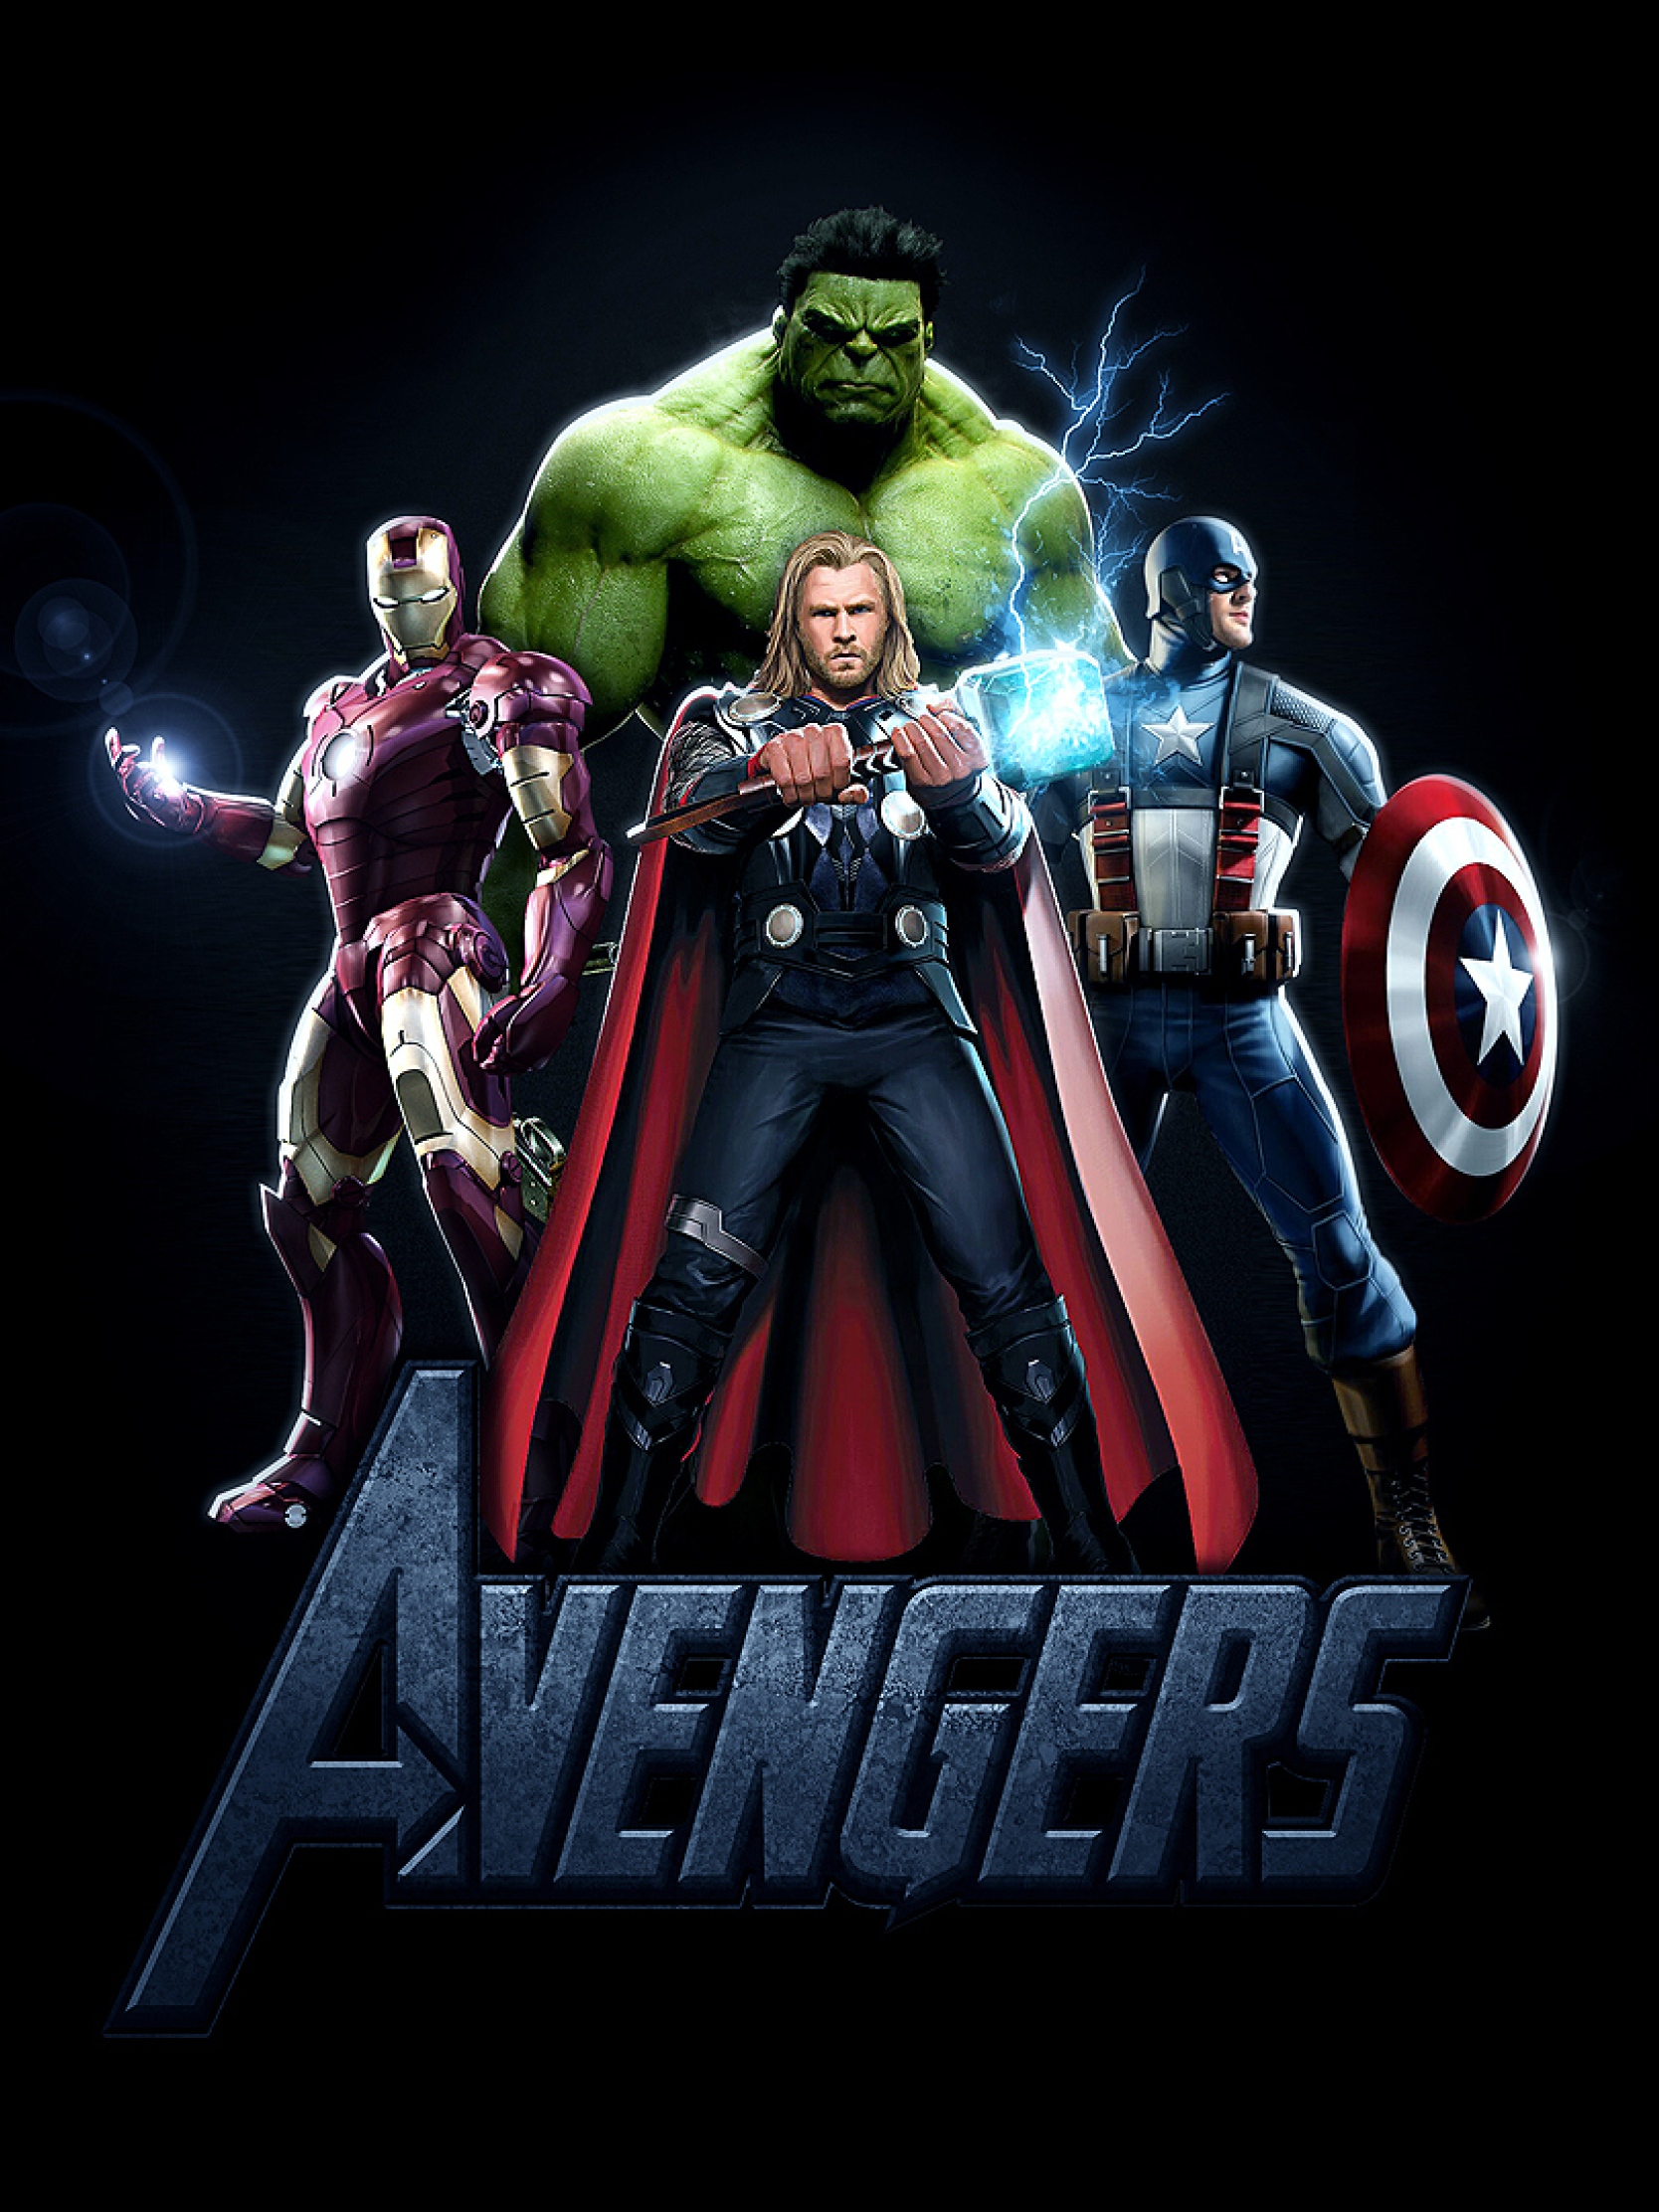 Avengers photos - avengers